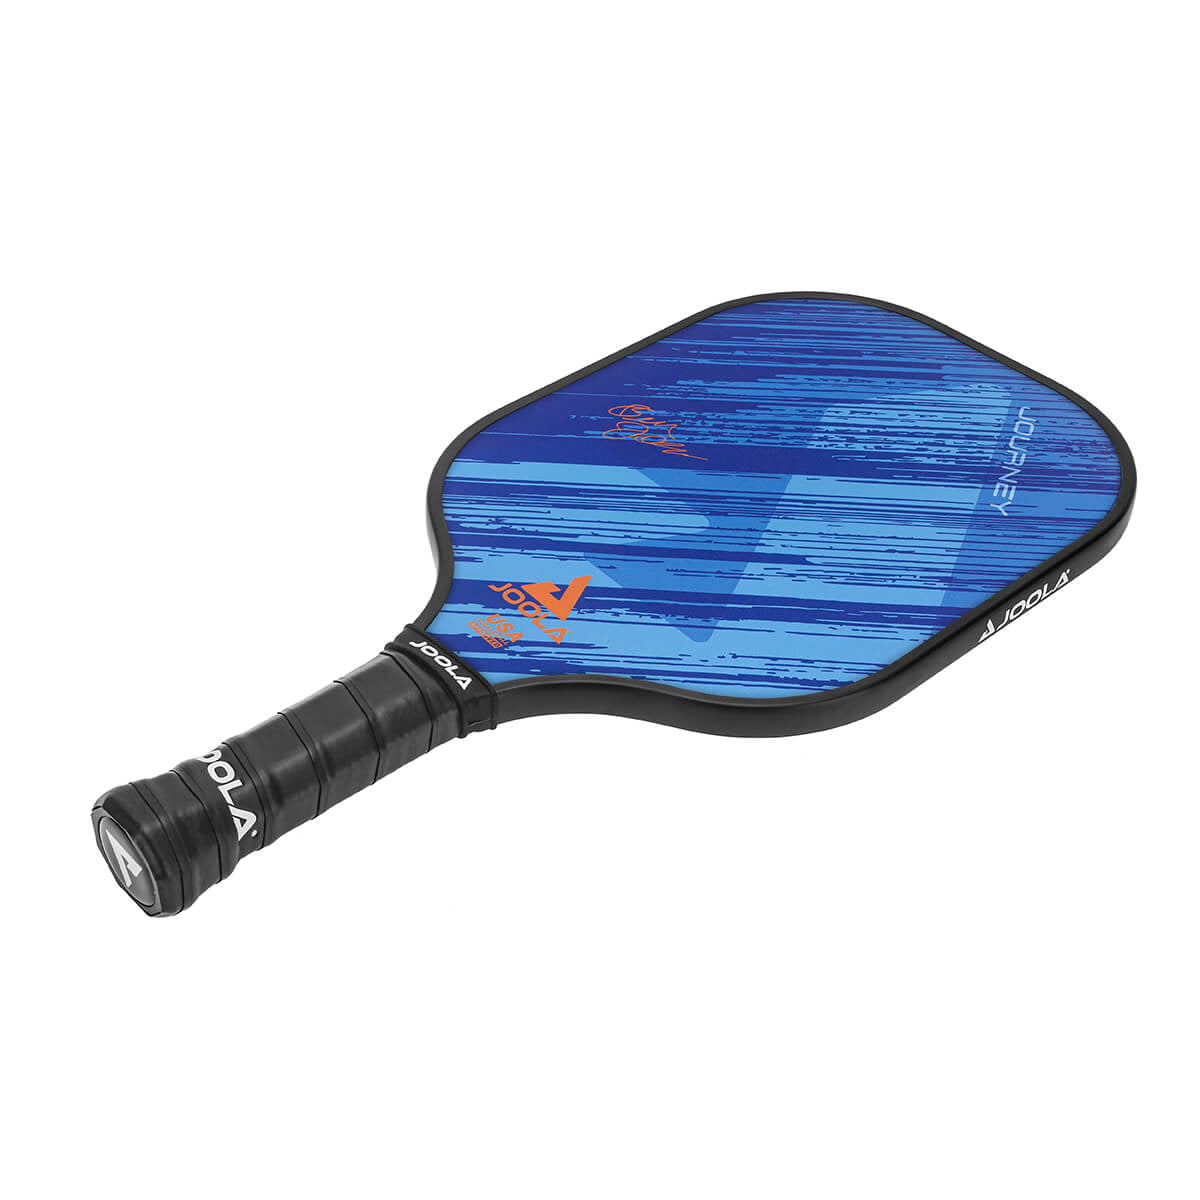 JOOLA Astro Fiberglass Pickleball Paddle for Intermediate and Beginner Players, Blue